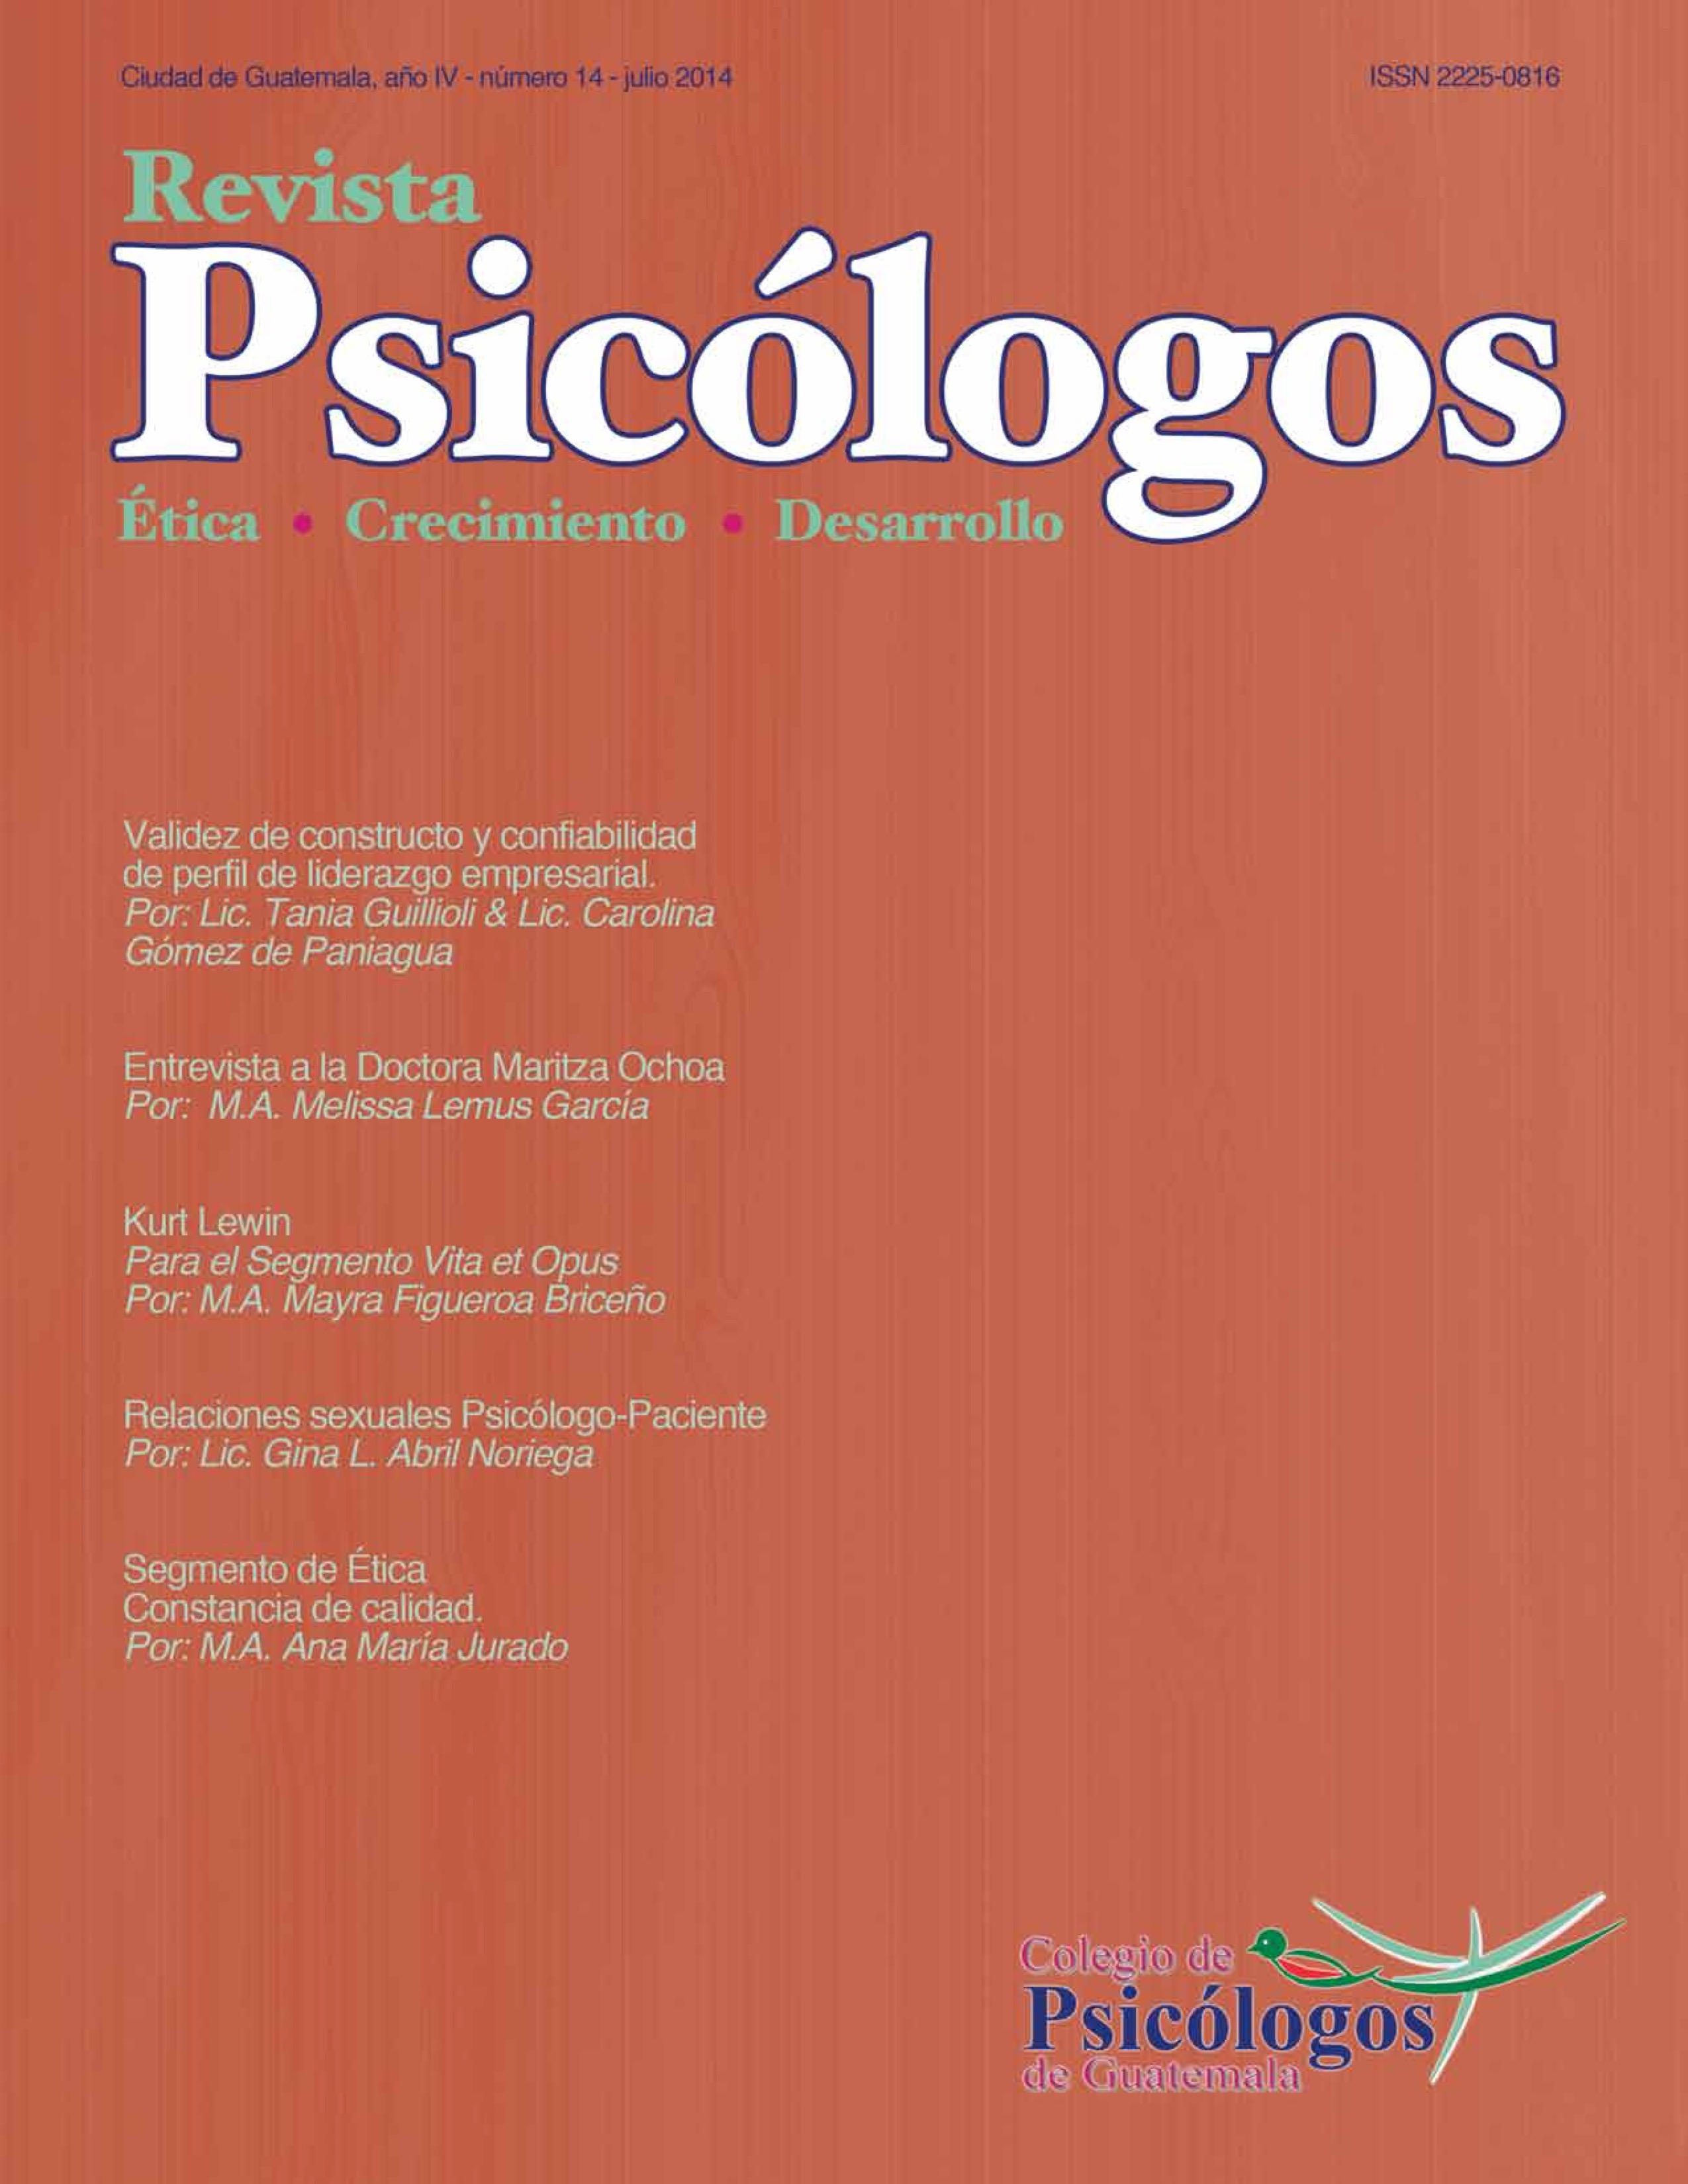 					Ver Vol. 4 Núm. 14 (2014): Revista Psicólogos No. 14
				